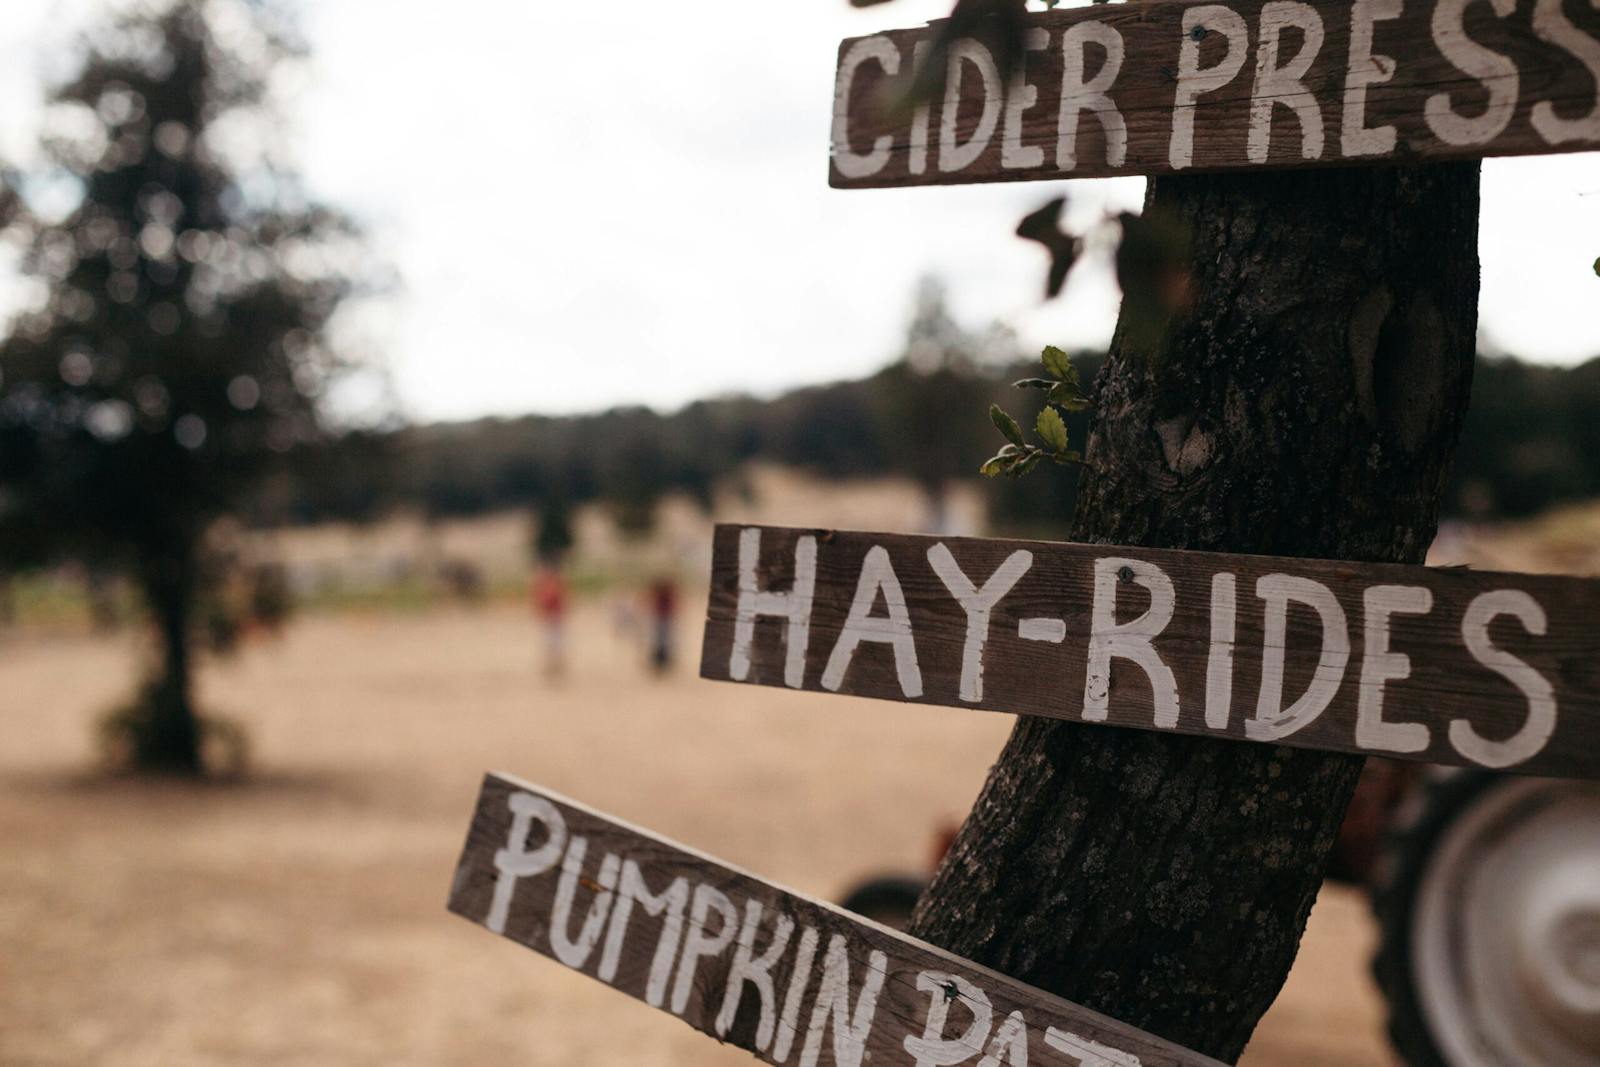 Hay rides, pumpkin patch, cider press sign, farm activities, farm tourism